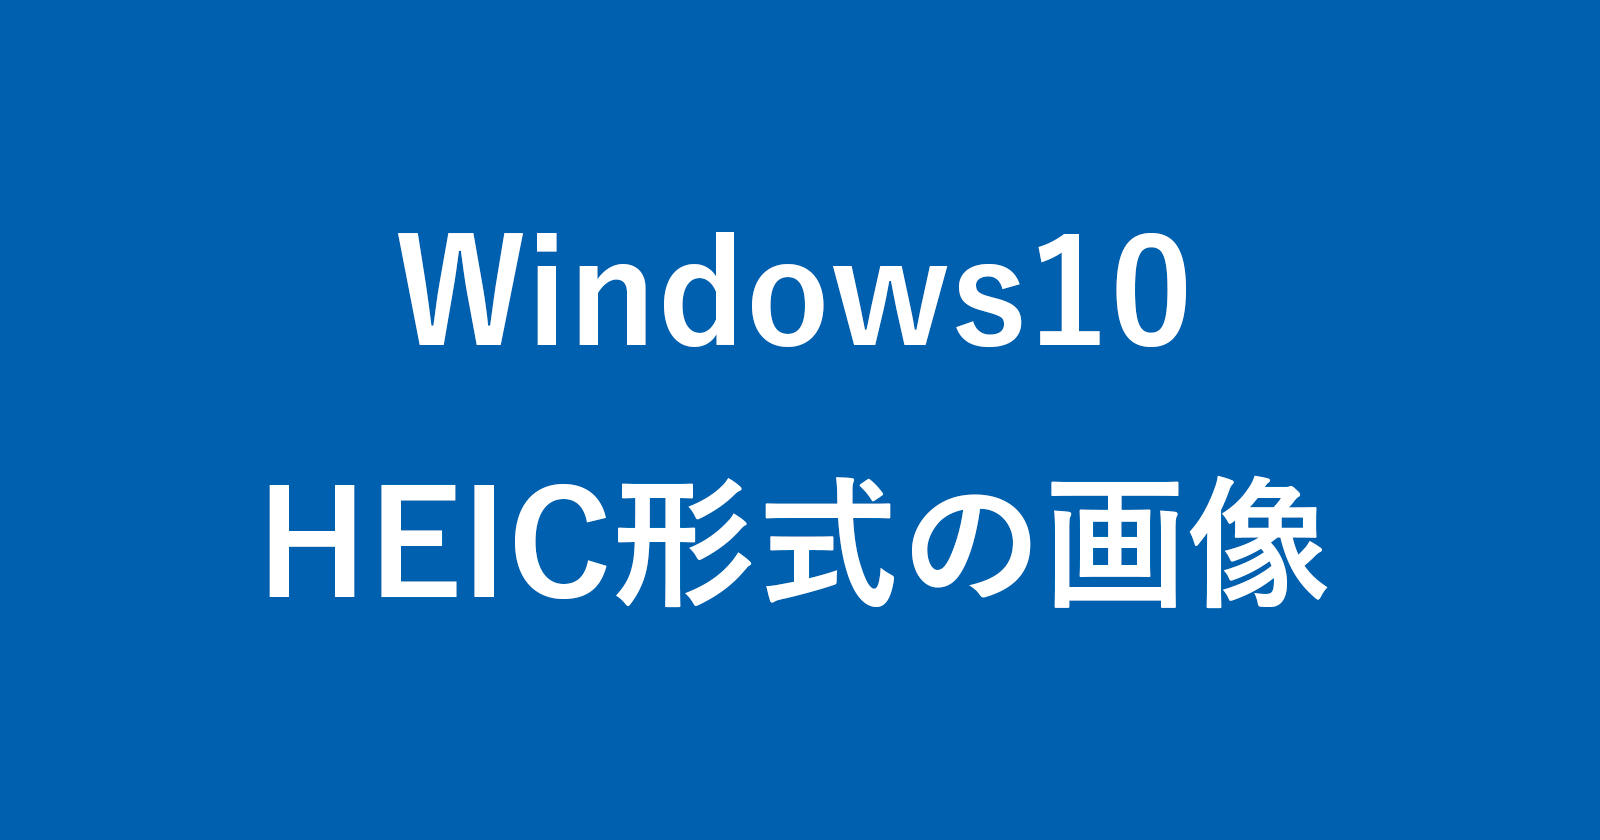 windows 10 heif heic